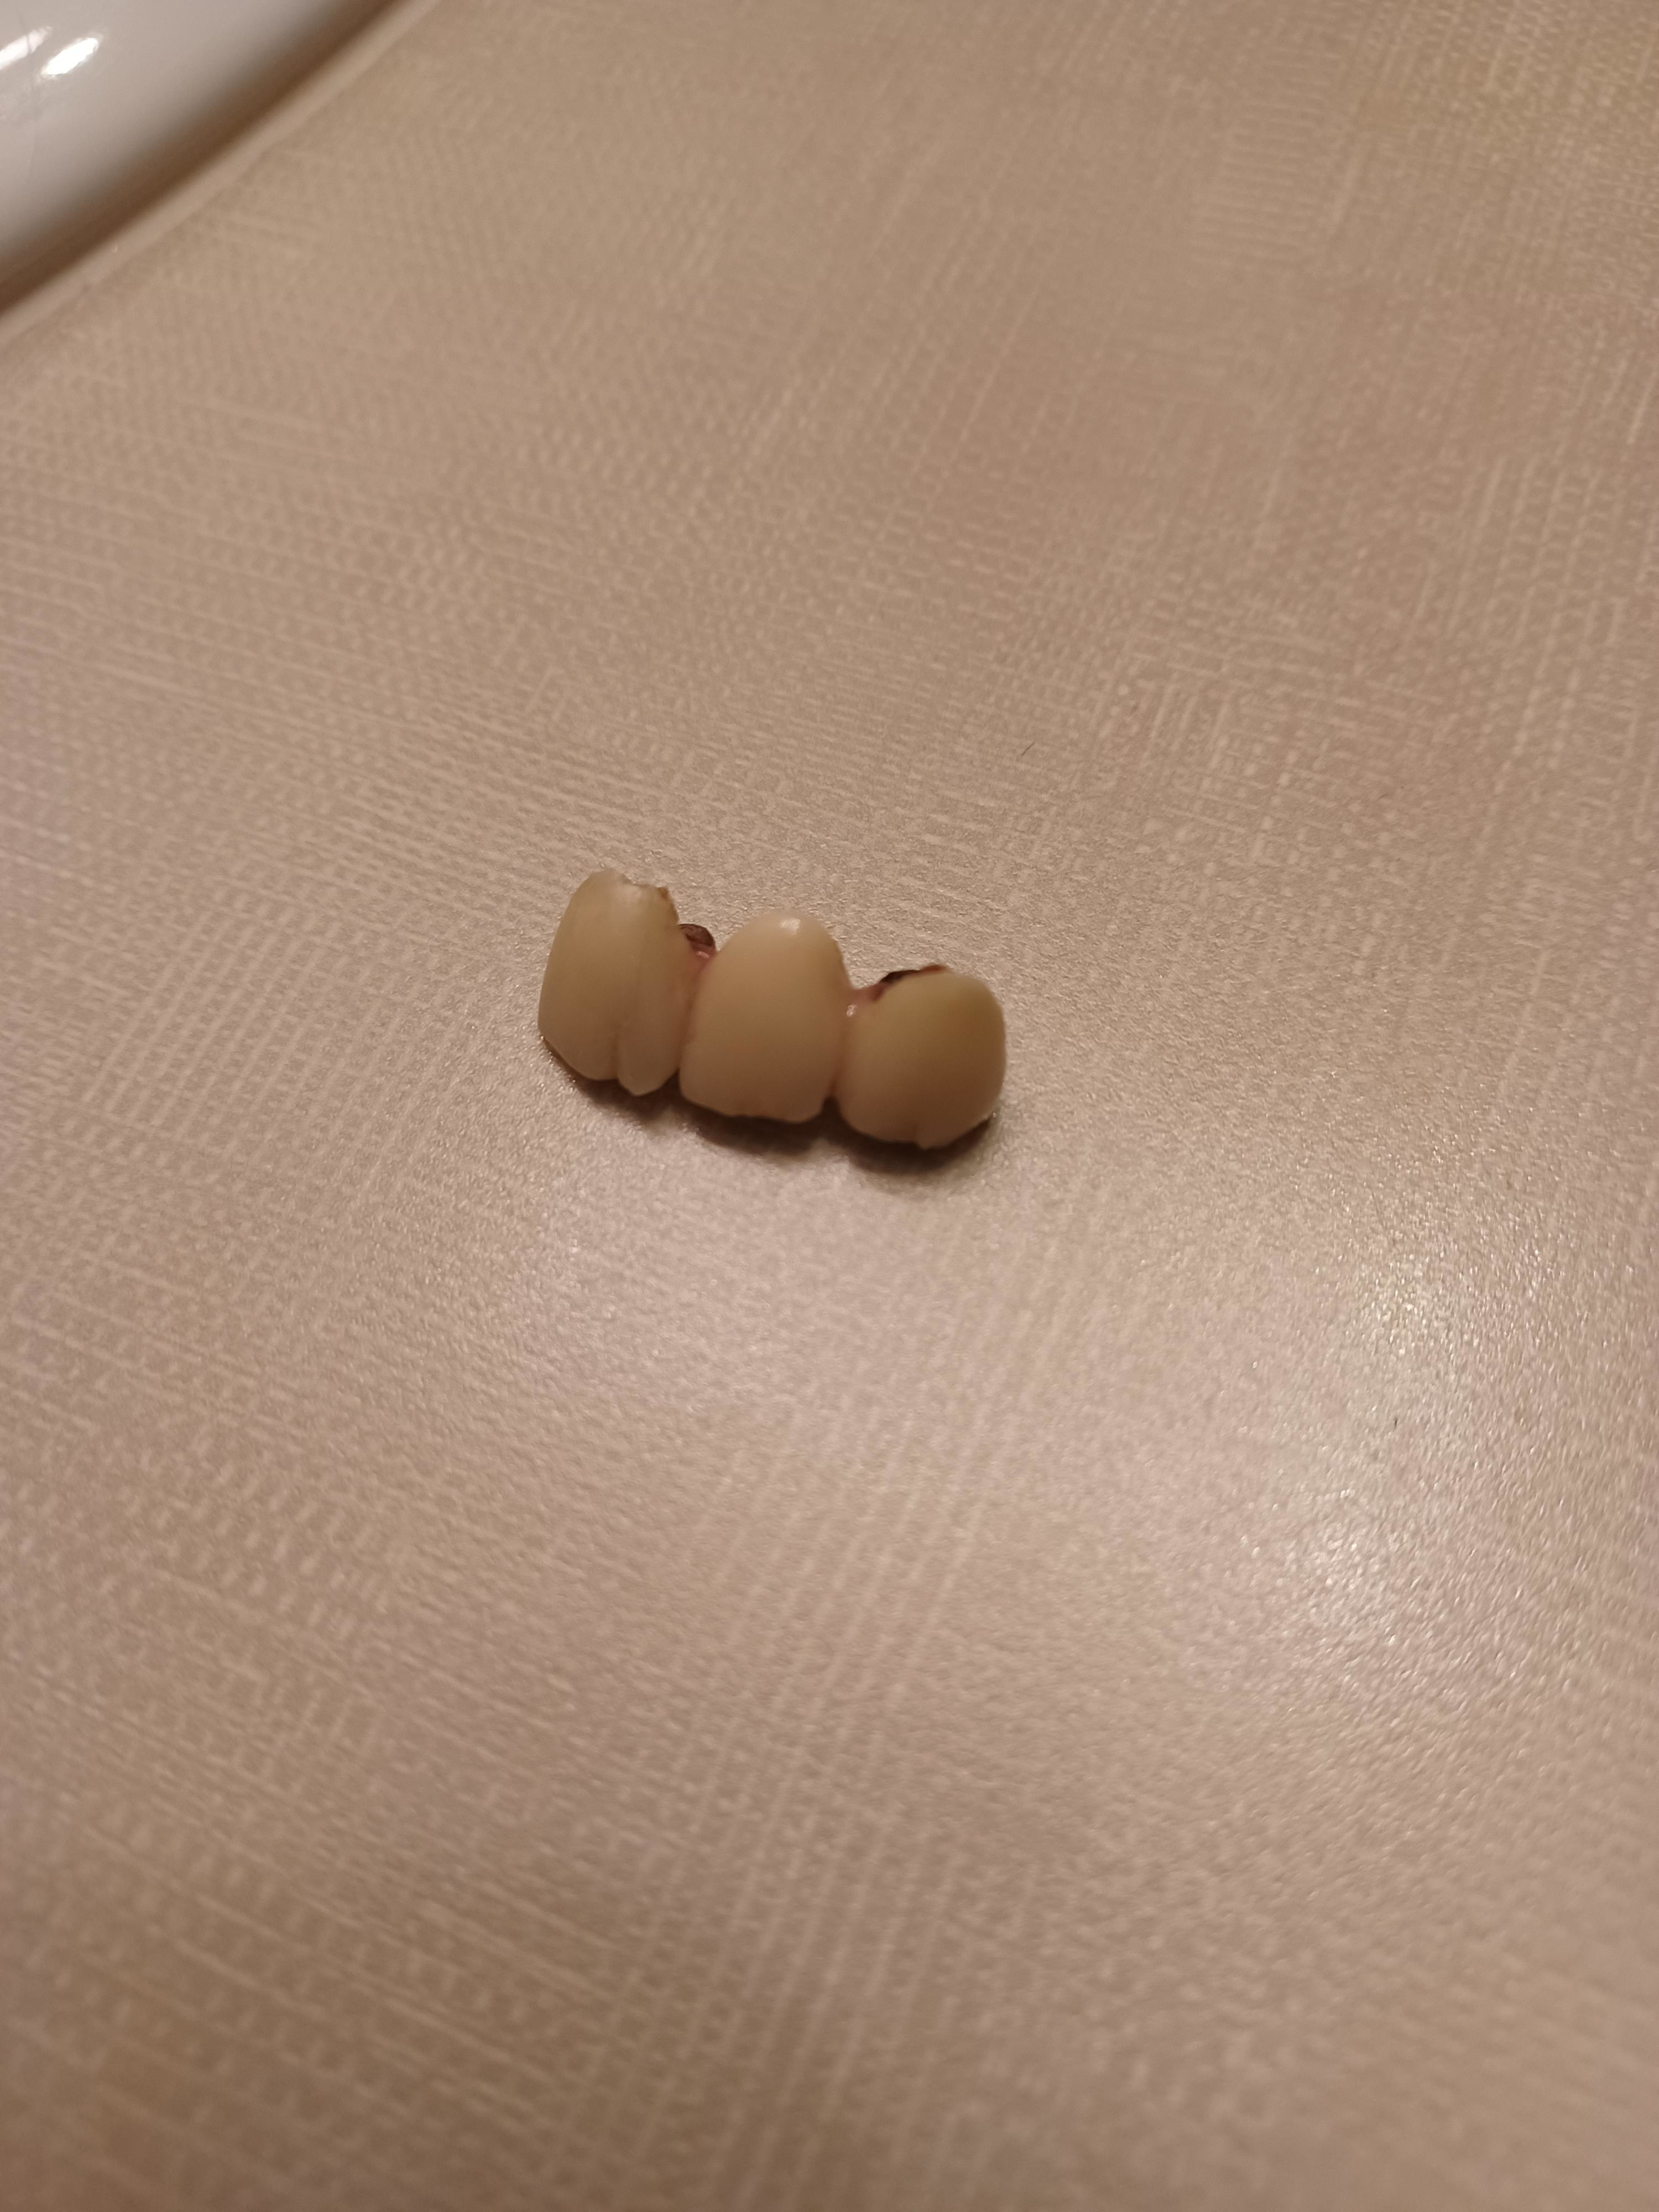 Broken teeth